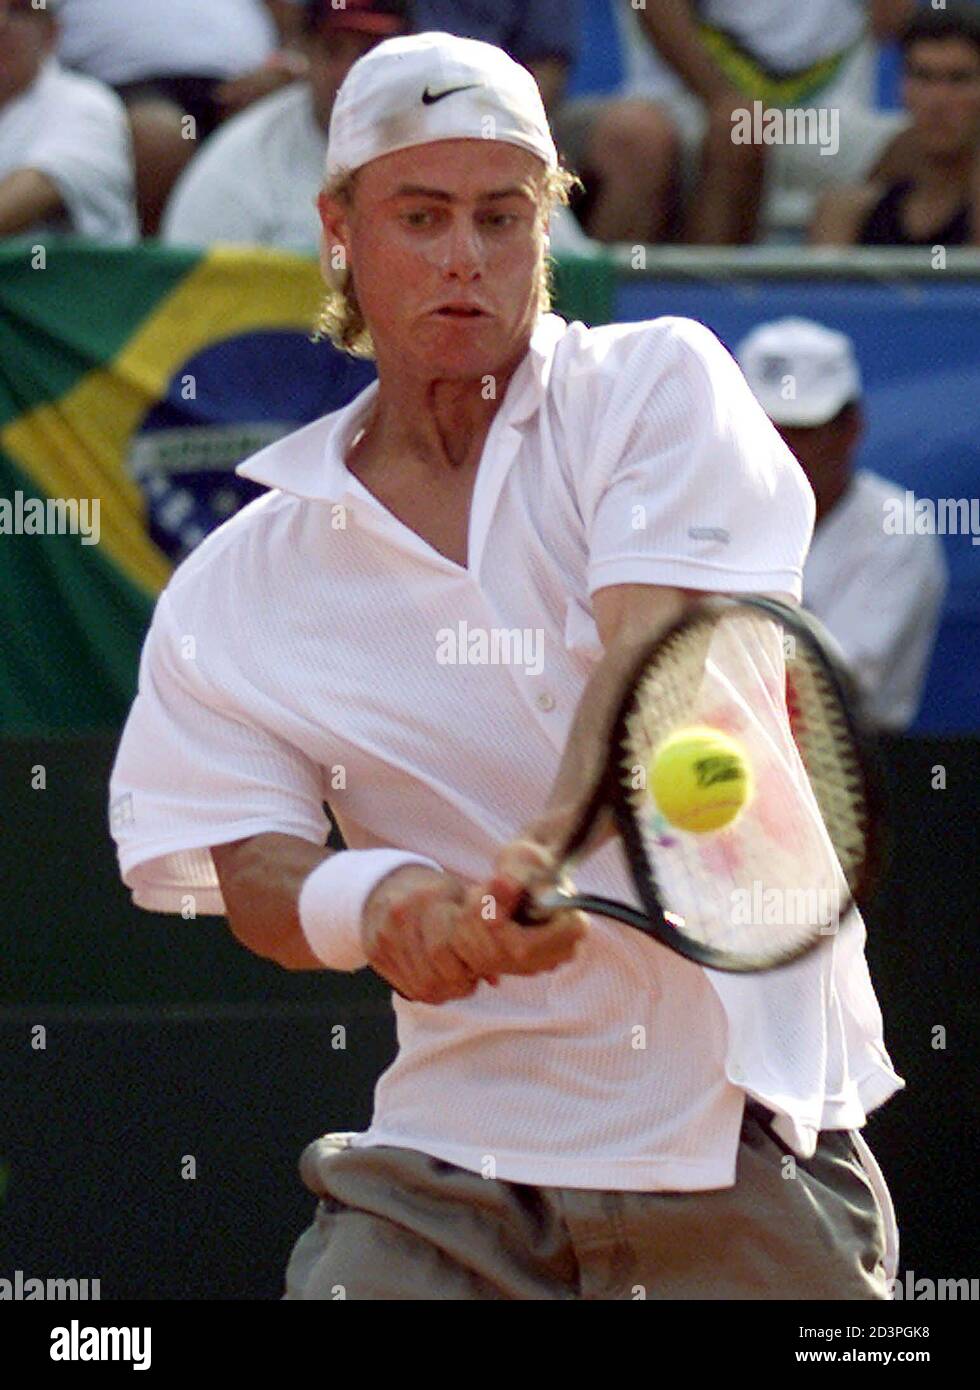 Australian tennis player Lleyton Hewitt plays a backhand against Brazilian  Fernando Meligeni during his Davis Cup quarter final match in  Florianopolis, April 6, 2001. Hewitt defeated Meligeni 6-3 6-3 6-3 and  Brazil